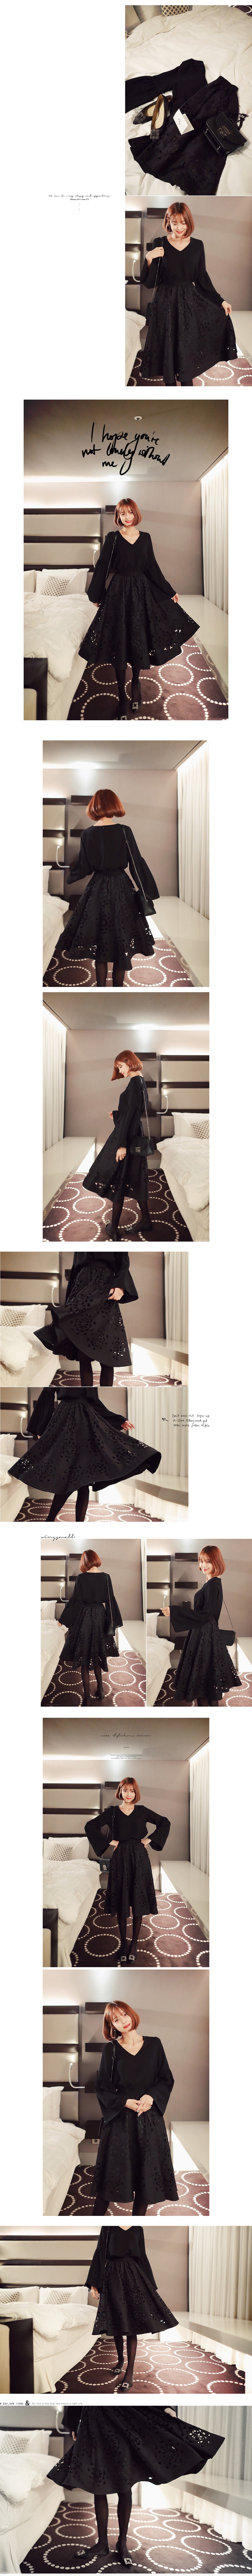 MAGZERO 【秋季新品】 镂空图案喇叭半身裙 #黑色 均码(S-M)